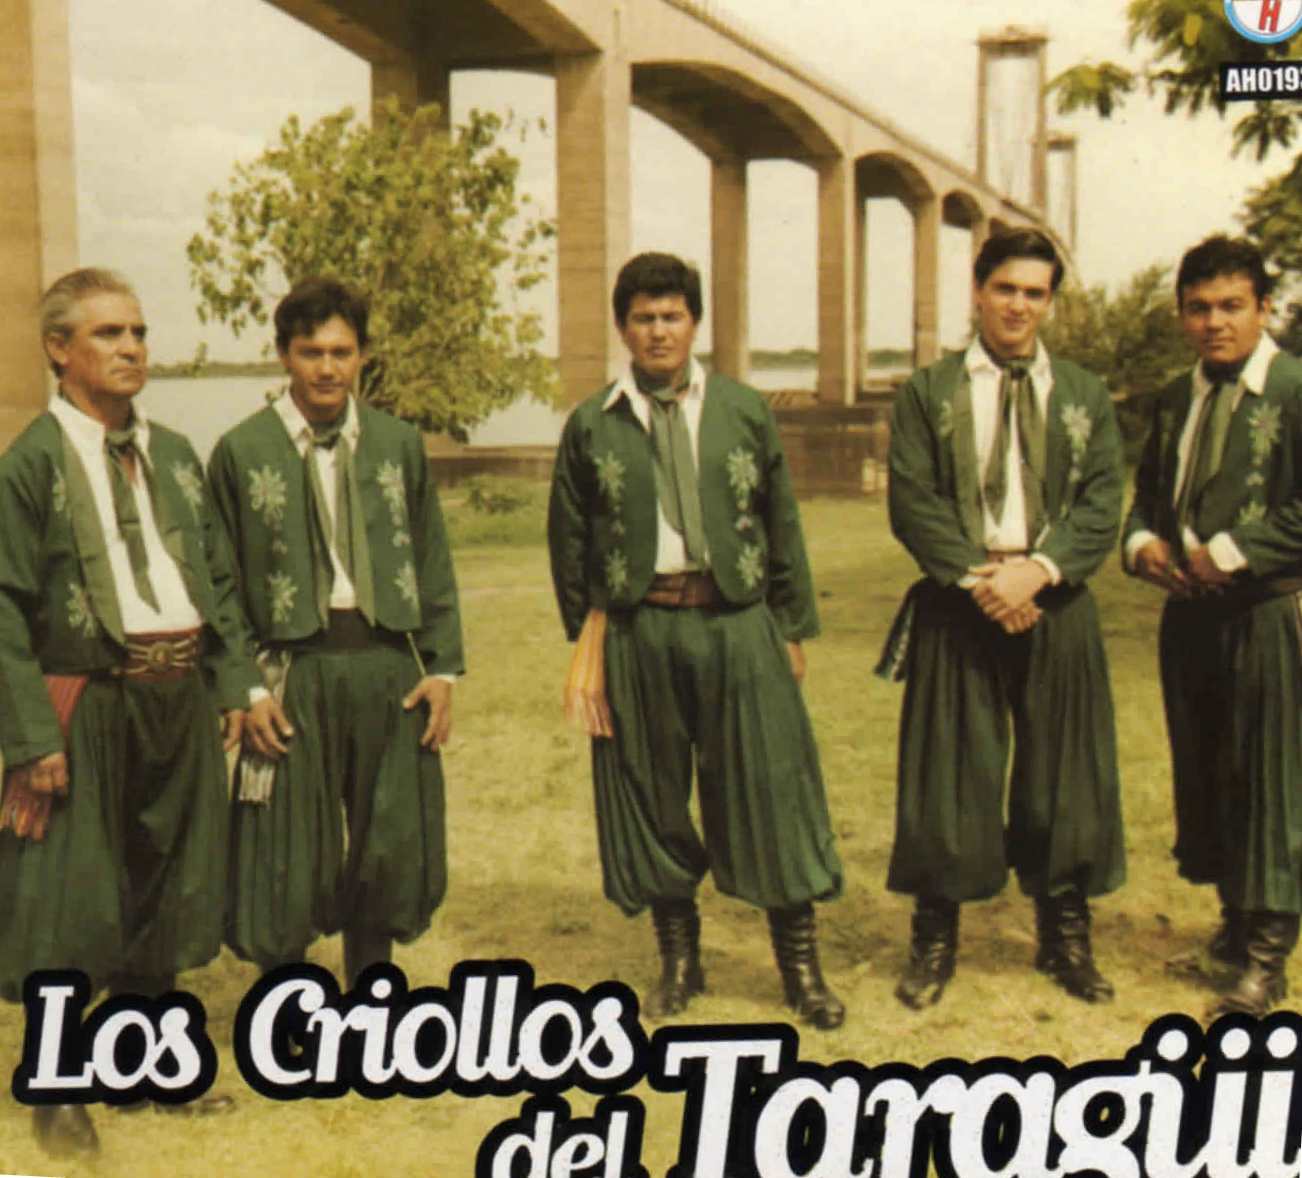 [Los+Criollos+del+Taragüi.jpg]